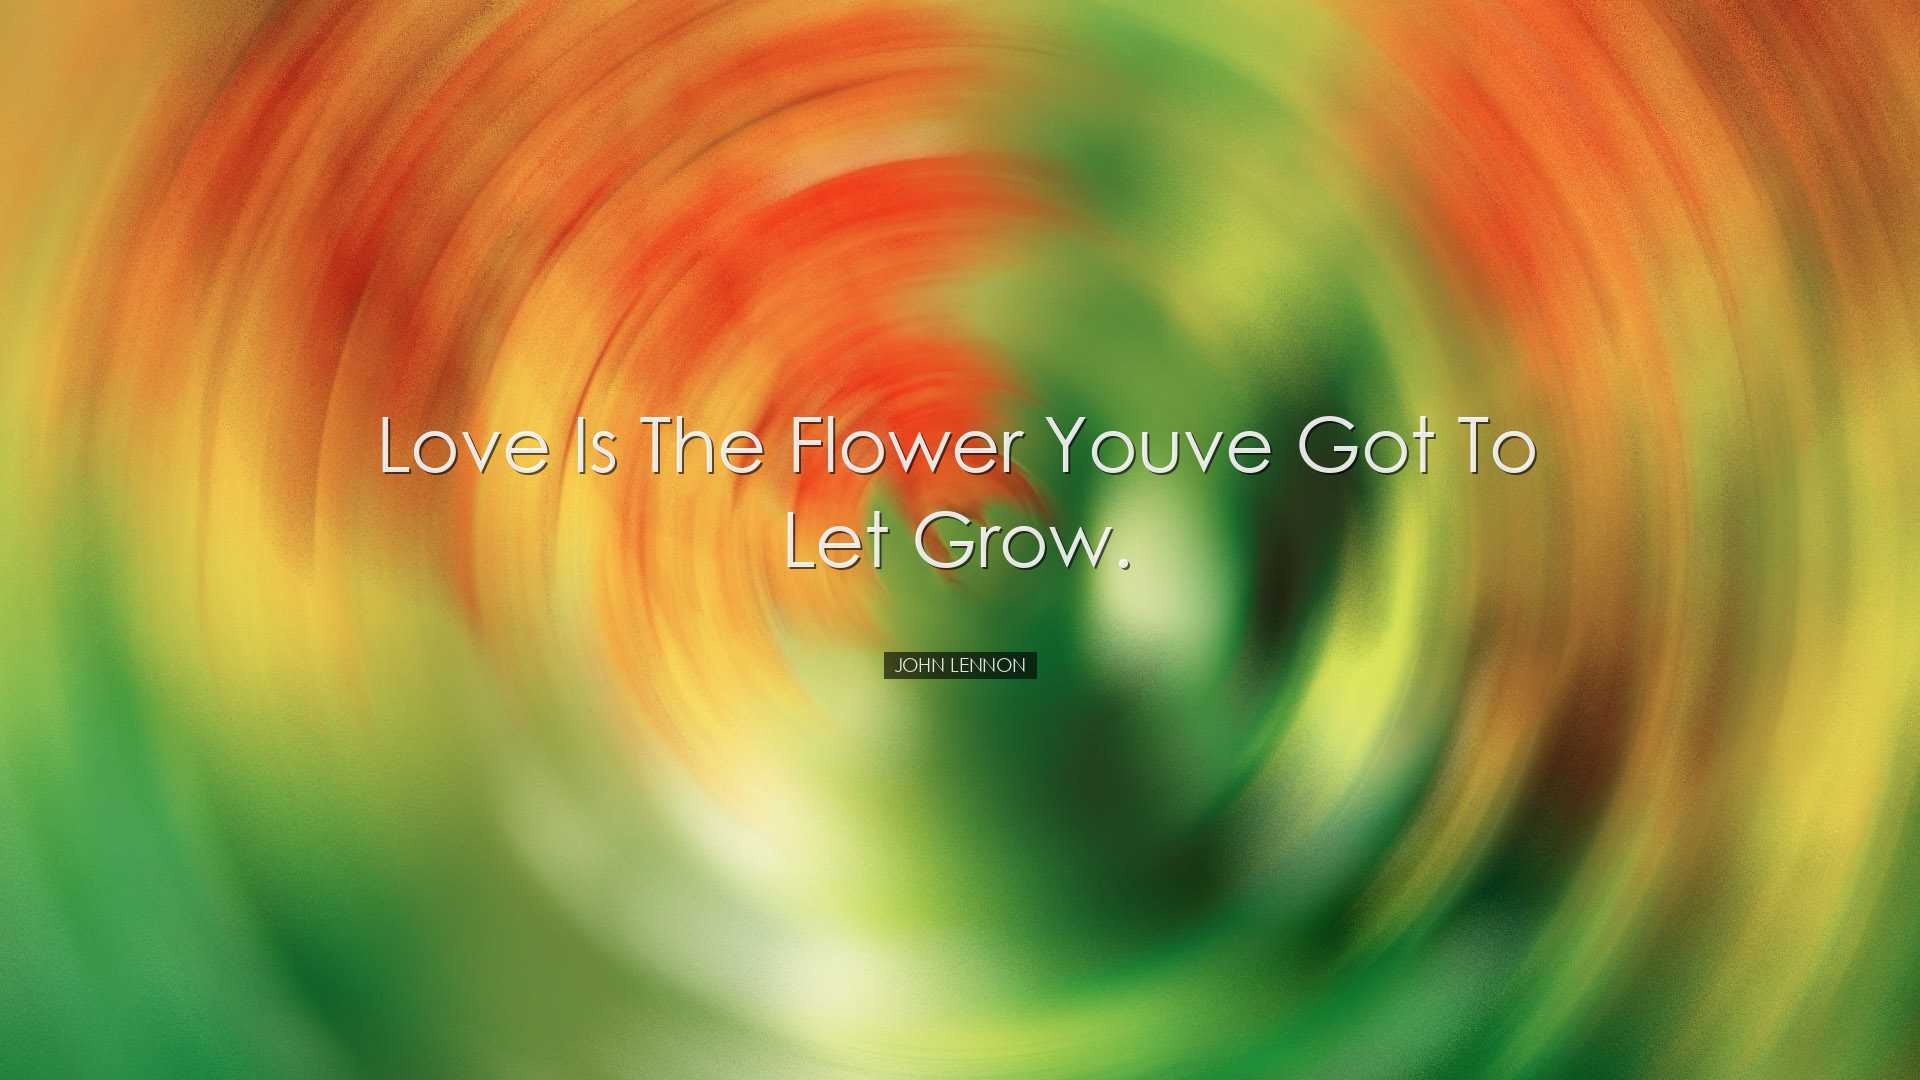 Love is the flower youve got to let grow. - John Lennon